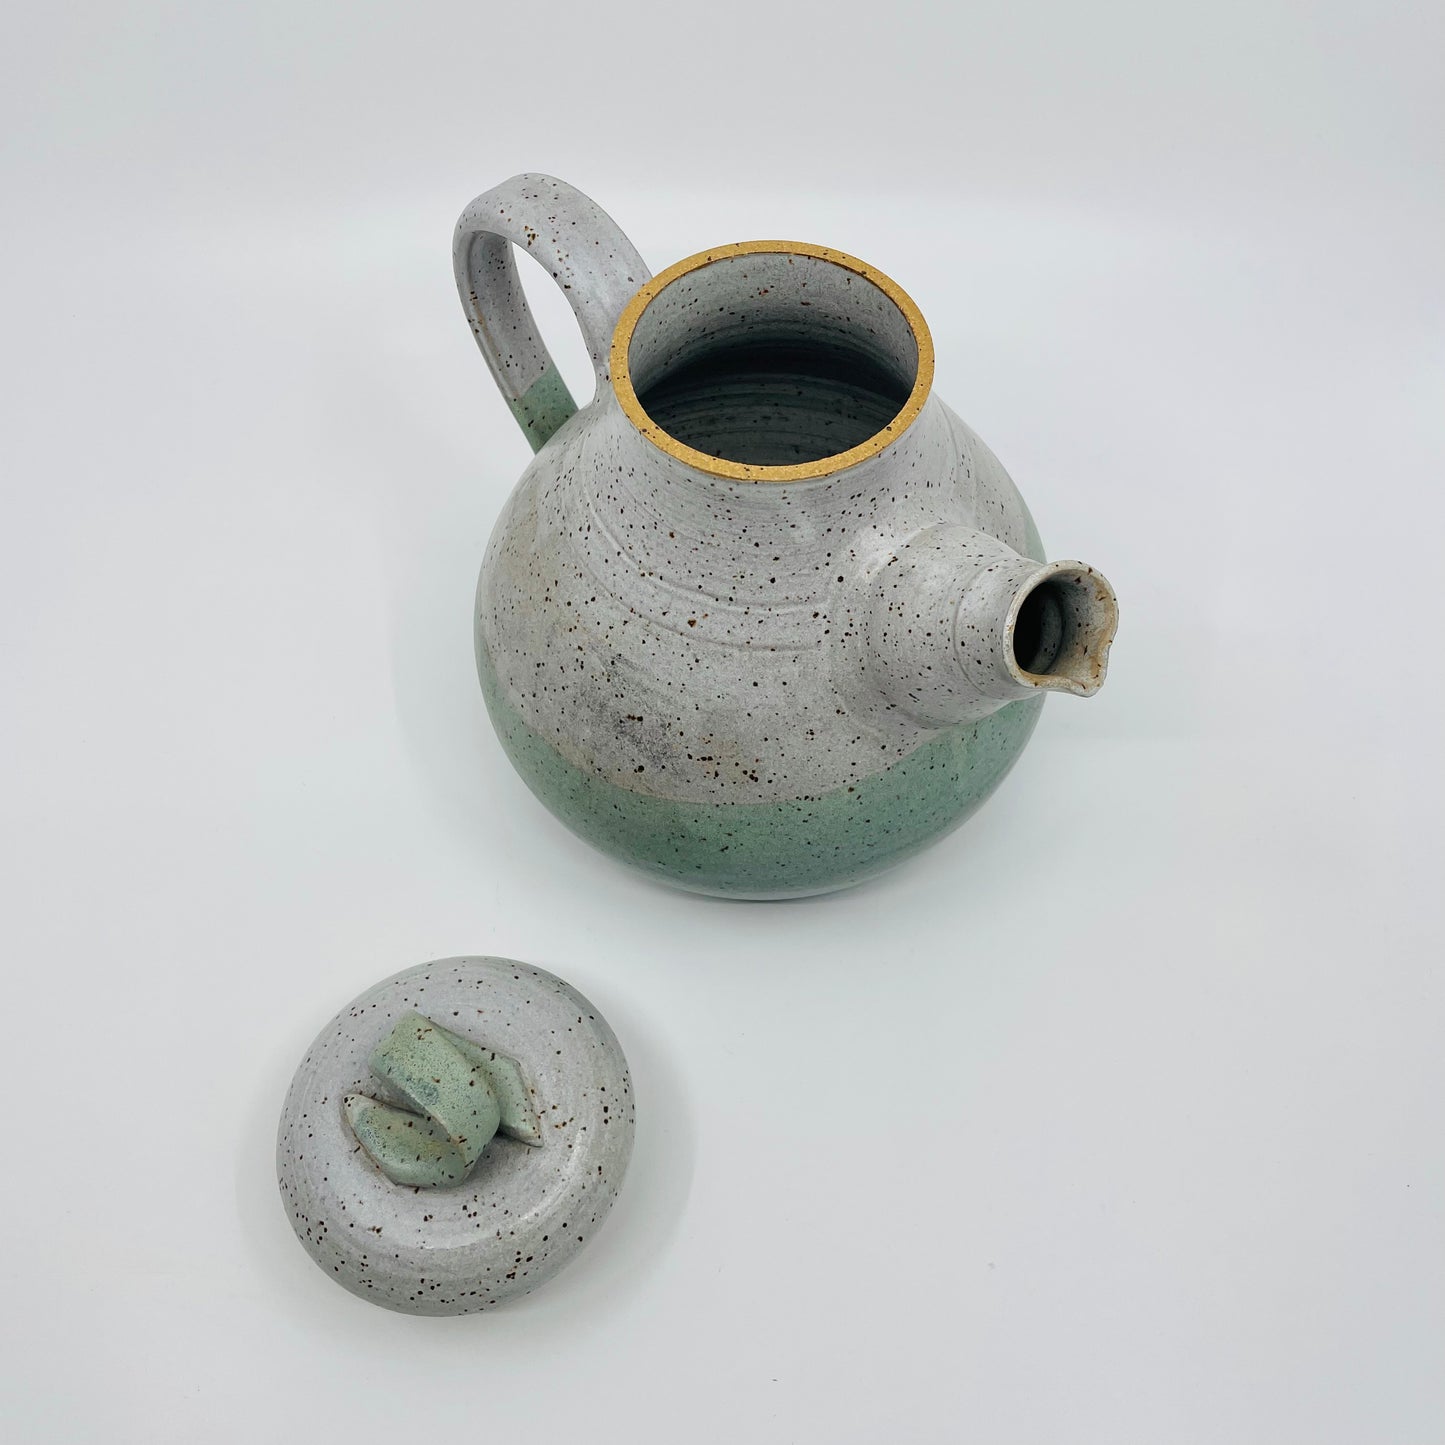 Minty Speckle Stoneware Teapot